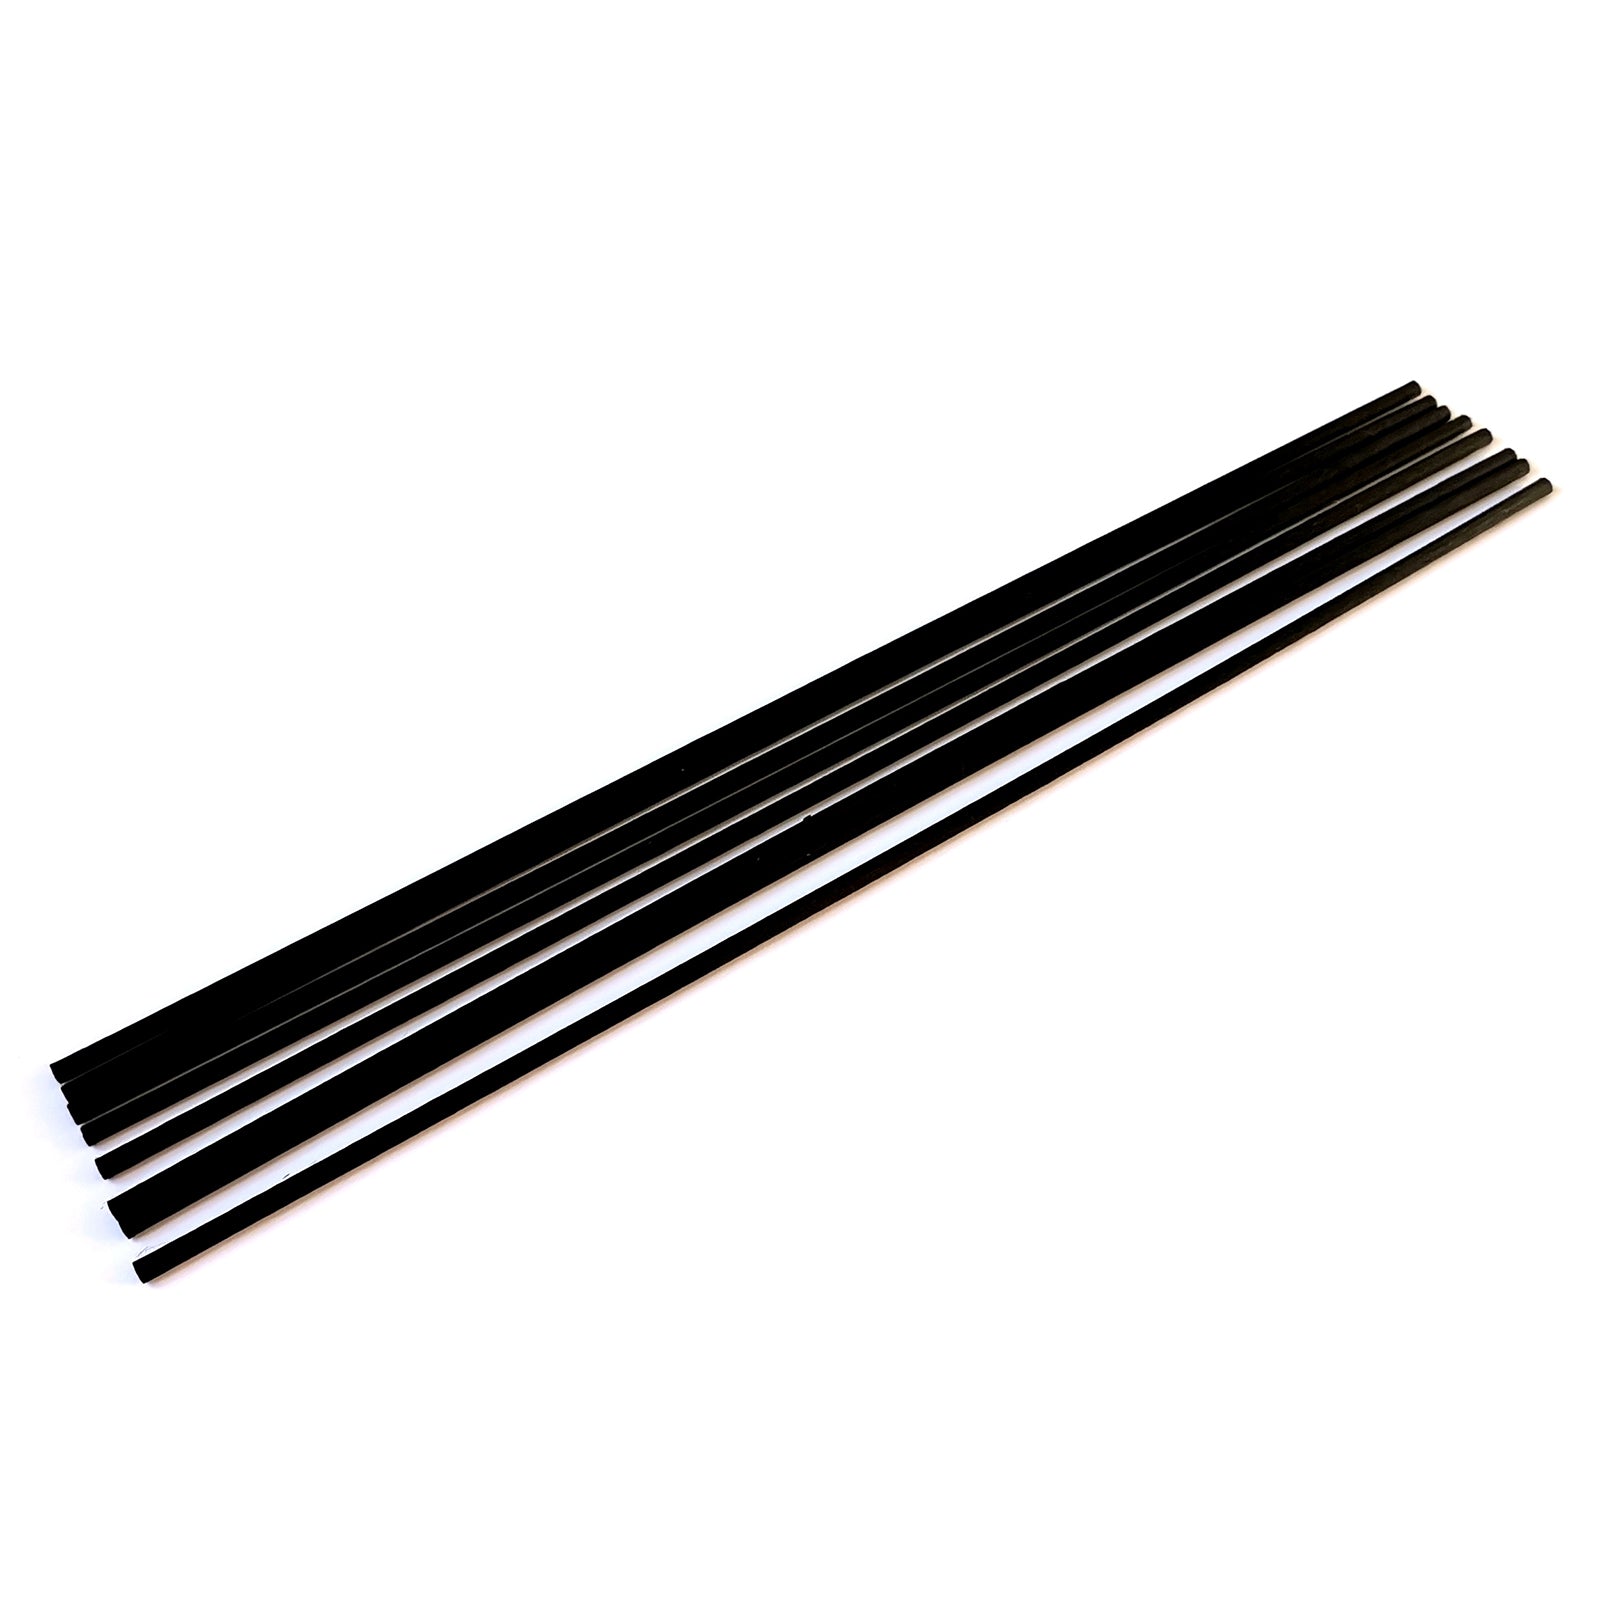 Fibre Black Reed Diffuser - 25cm x 3mm Pack of 10